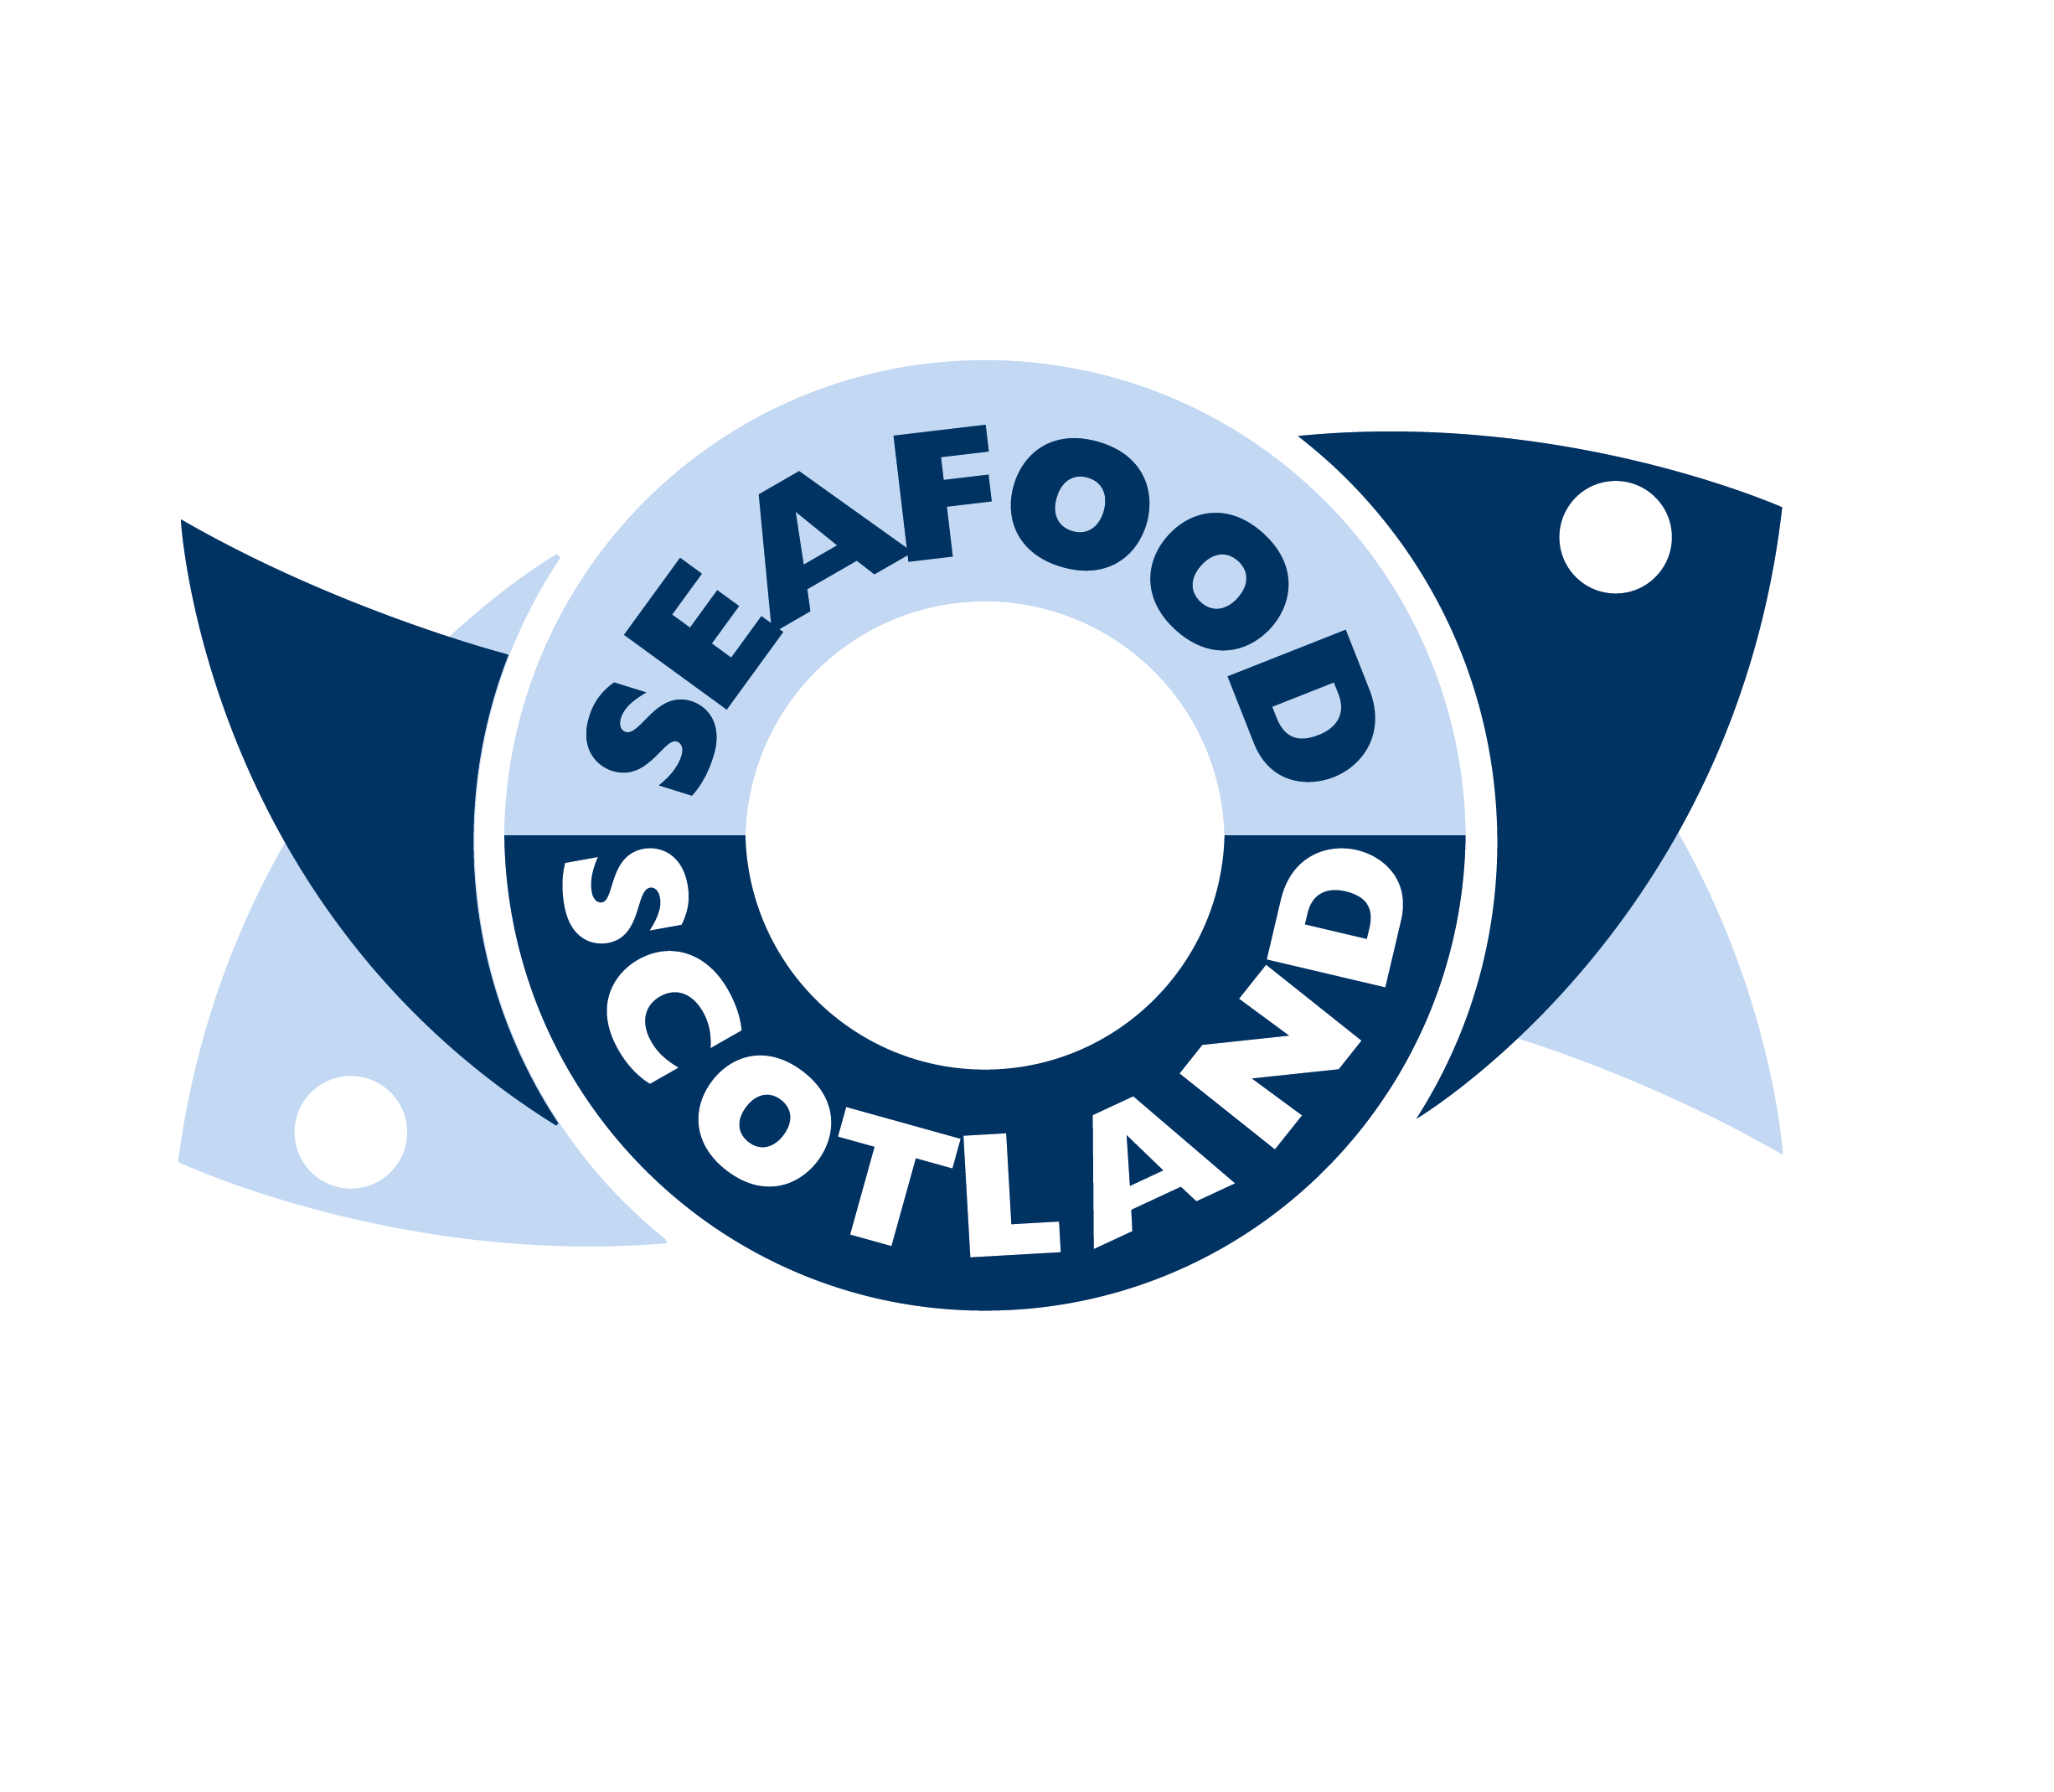 SEAFOOD-SCOTLAND-HIGHEST-RESOLUTION-LOGO